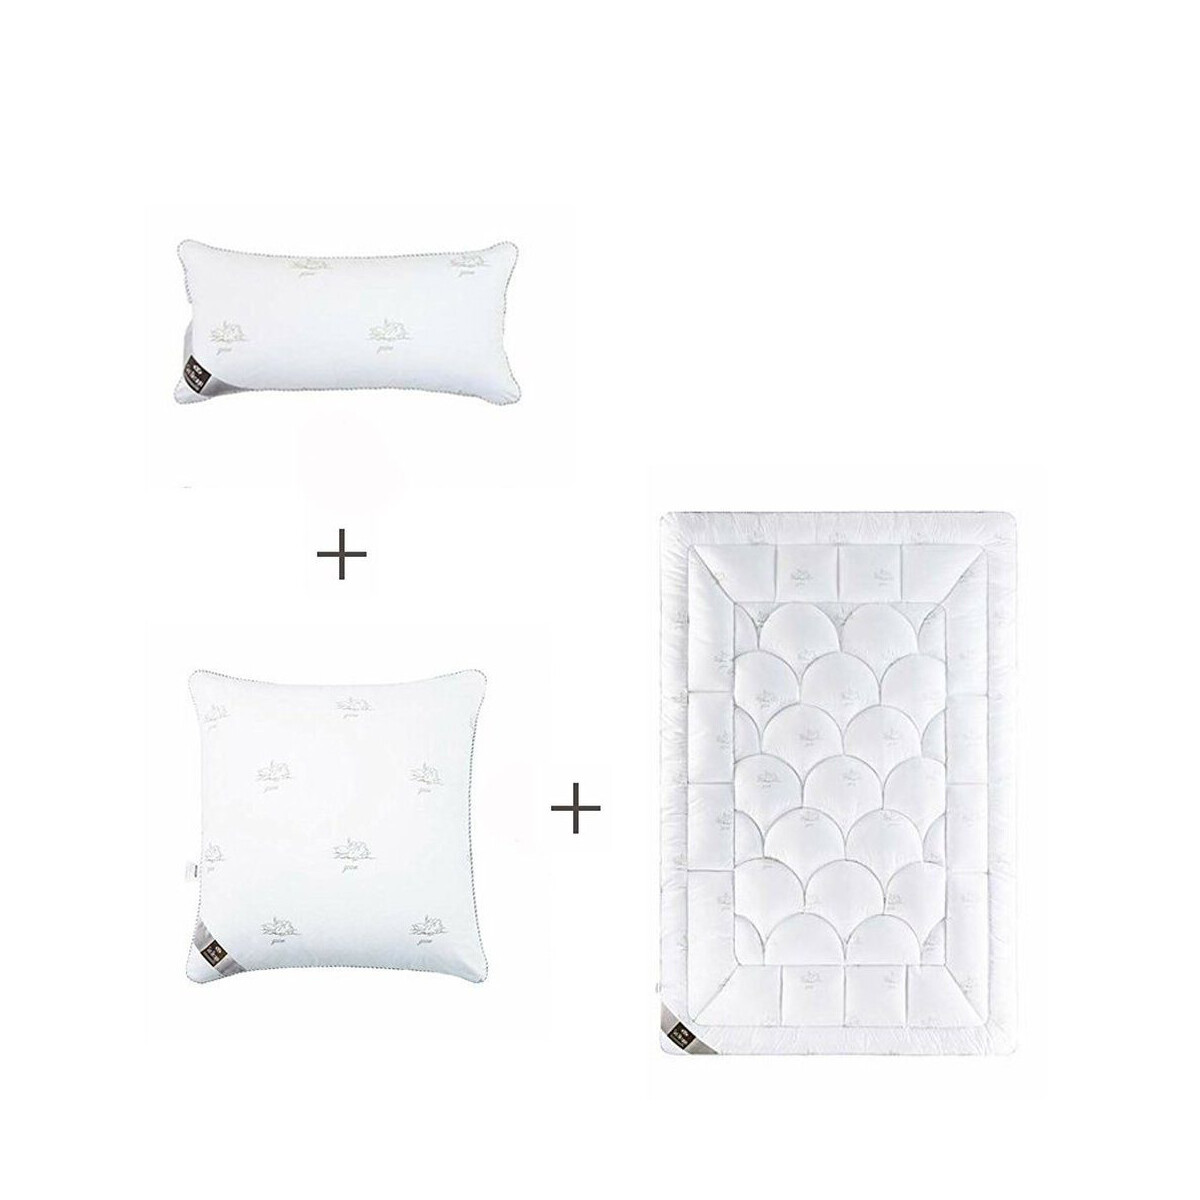 Hochwertige Bettdecken günstig bestellen - € Sei Design, 104,90